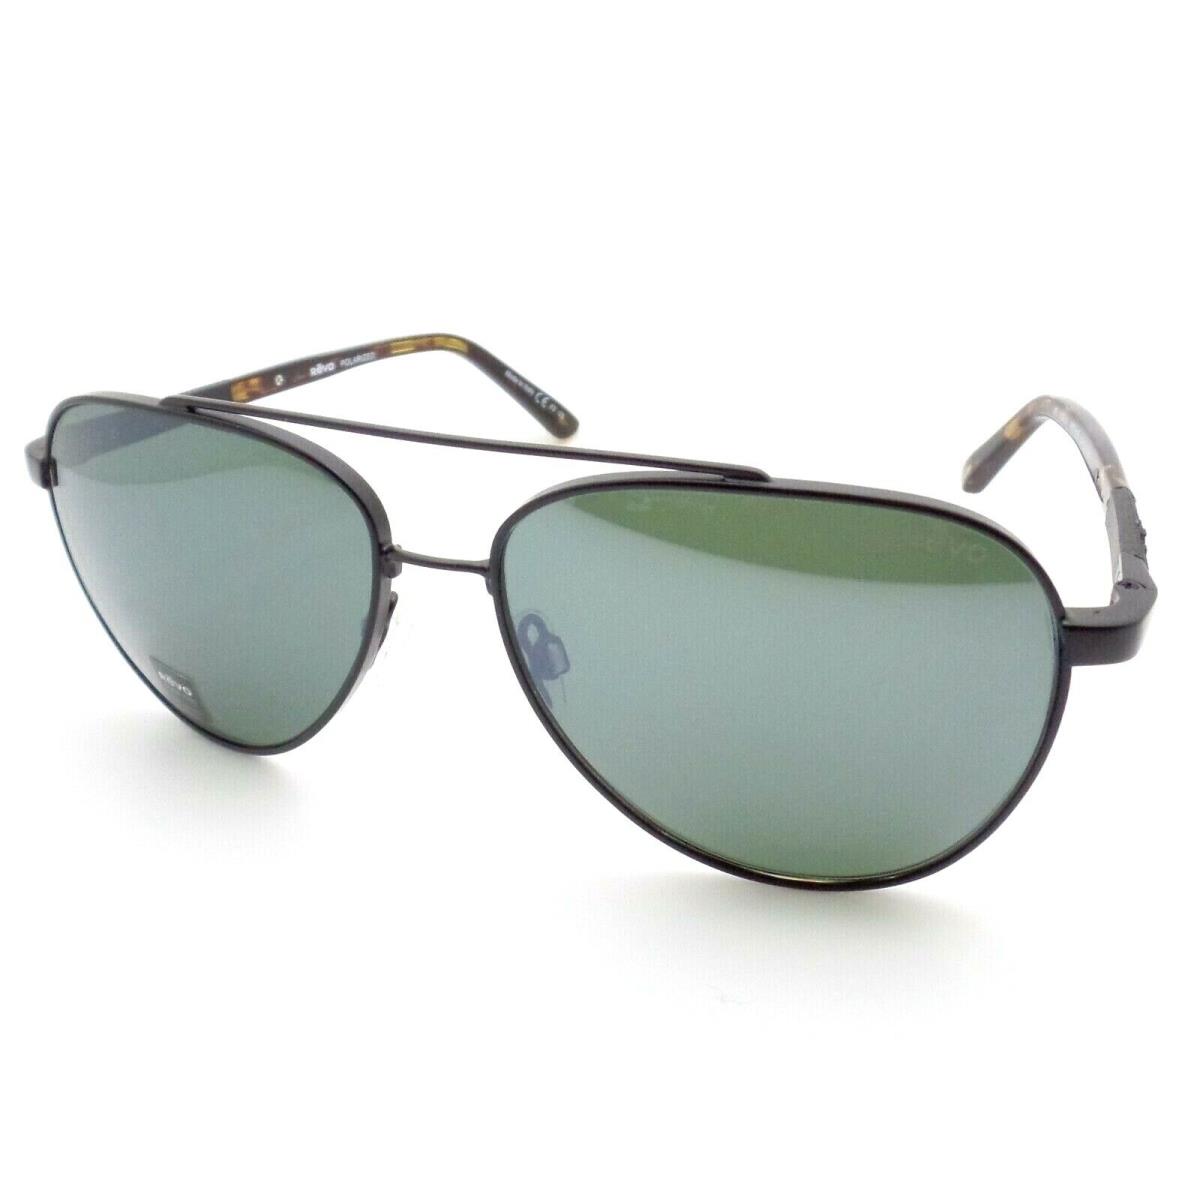 Revo sunglasses Arthur - Matte Black Tortoise